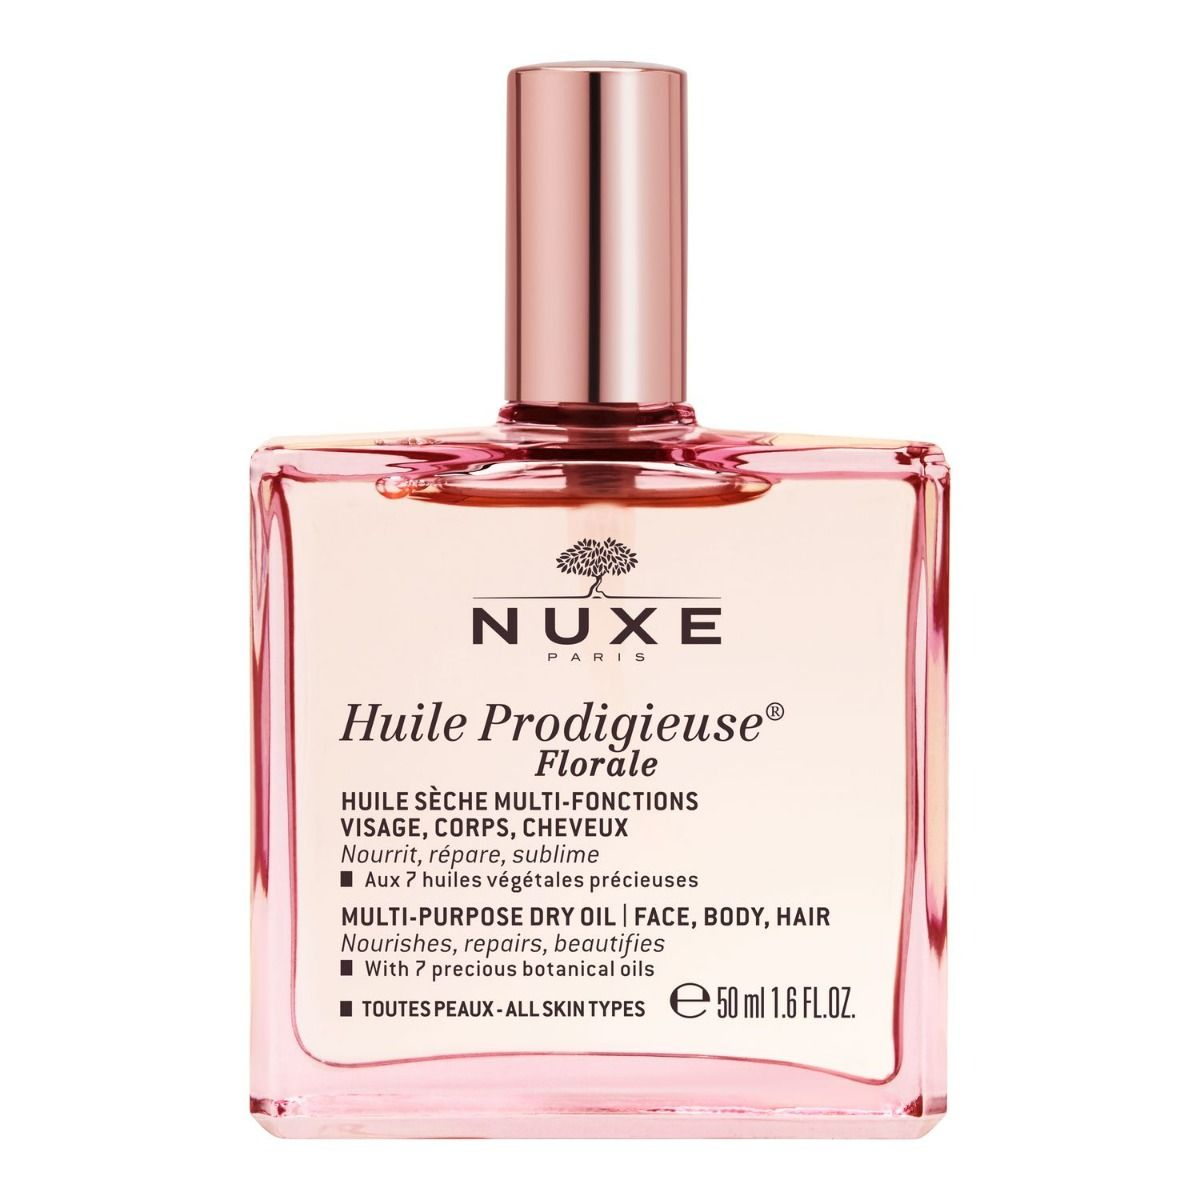 Nuxe Huile Prodigieuse Florale масло для лица, тела и волос, 50 ml нюкс продижьёз florale масло сух цветочное 100мл